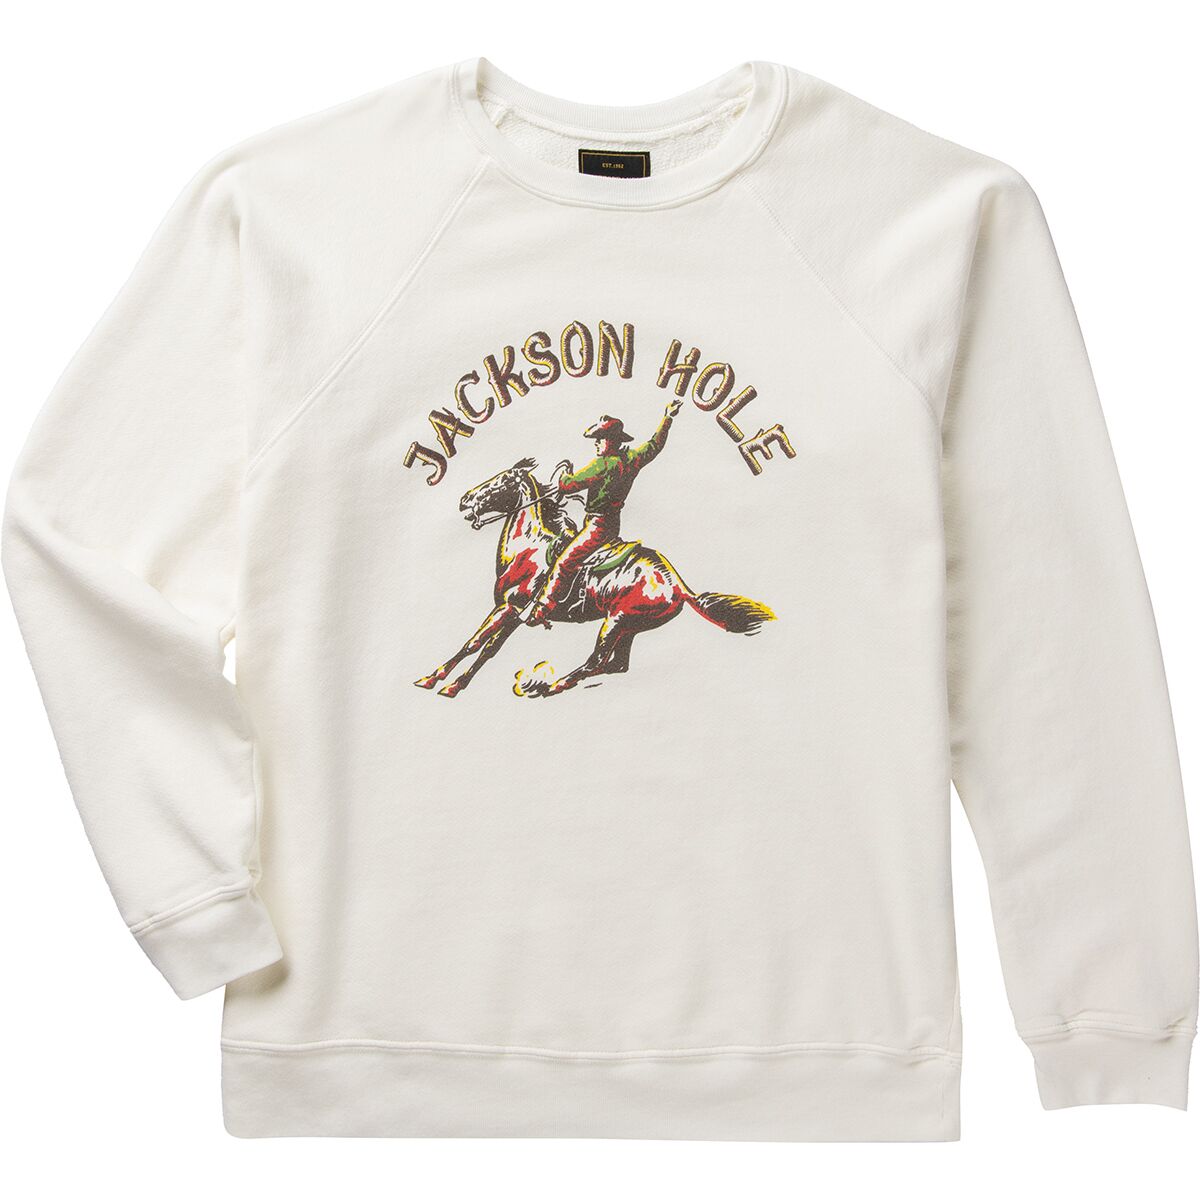 Original Retro Brand Jackson Hole Sweatshirt - Women's